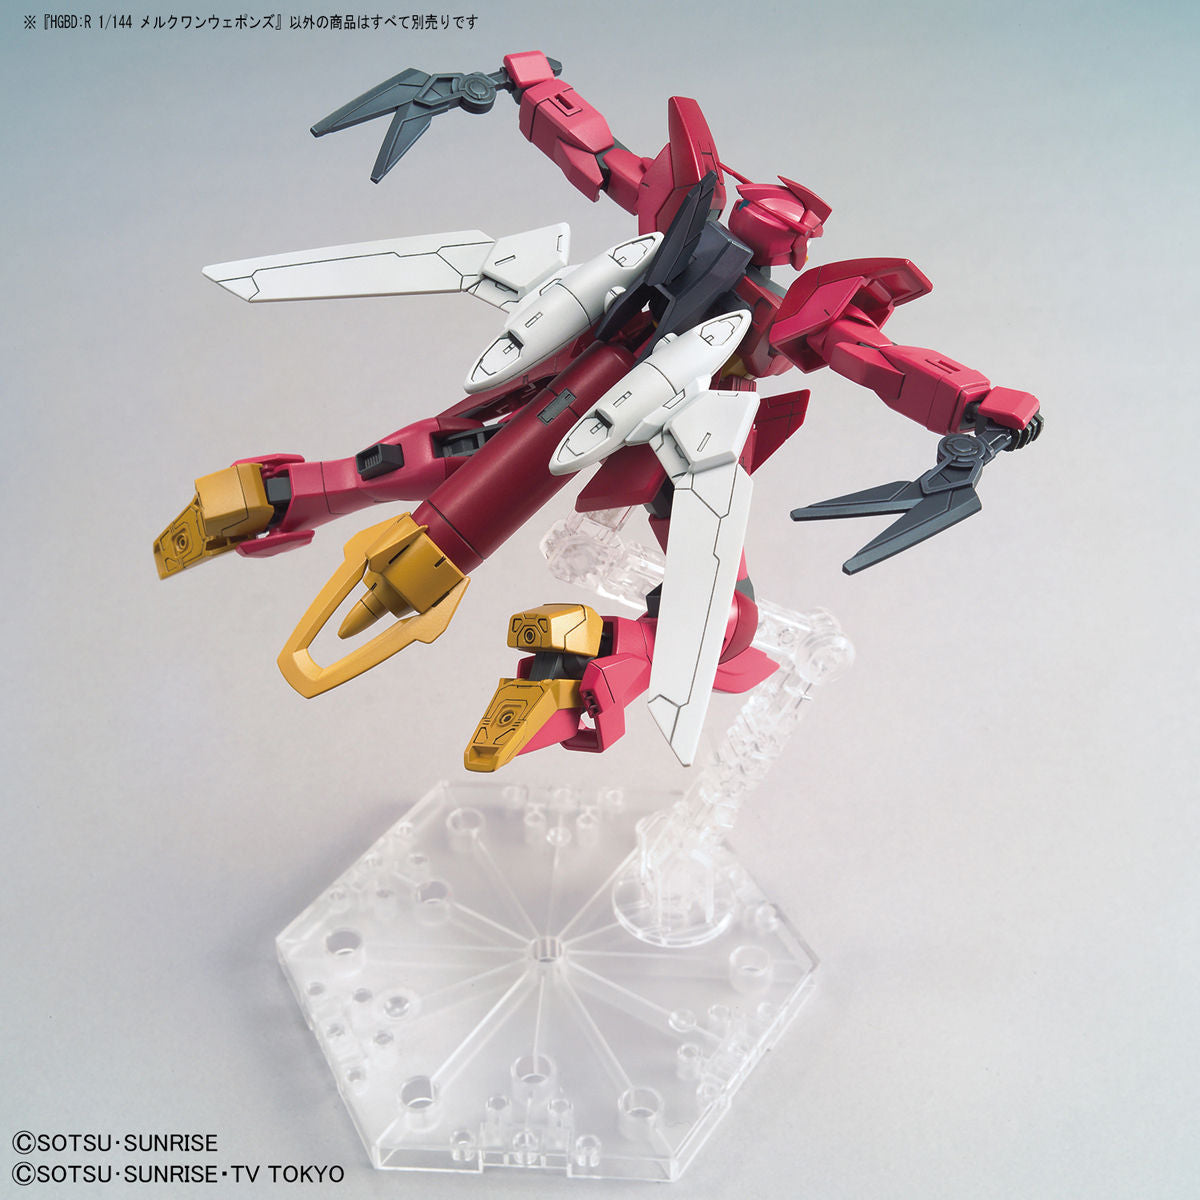 HGBD:R - PFF-X7/M1 Mercuone Gundam Weapons